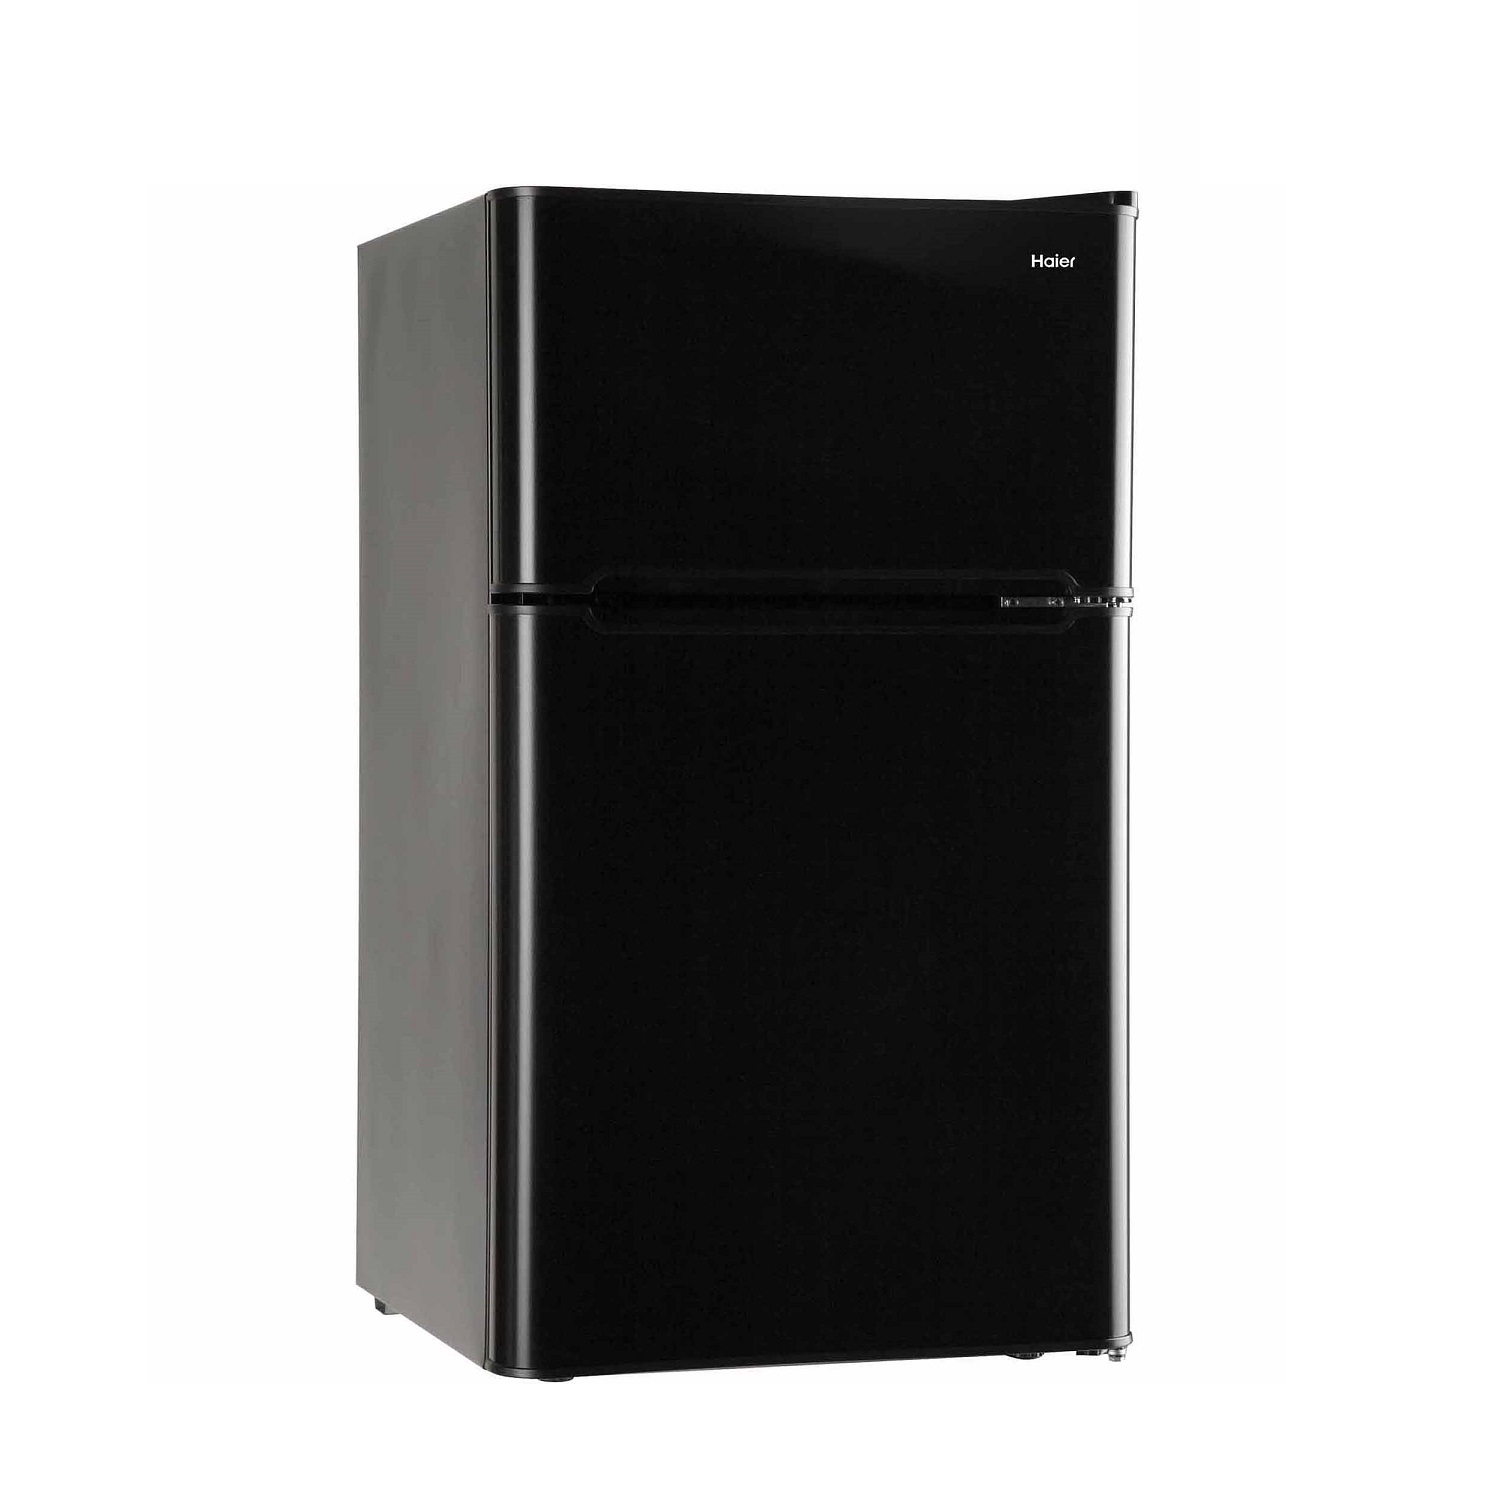 Haier 3.2 Cu Ft Two Door Refrigerator with Freezer HC32TW10SB, Black - image 1 of 4